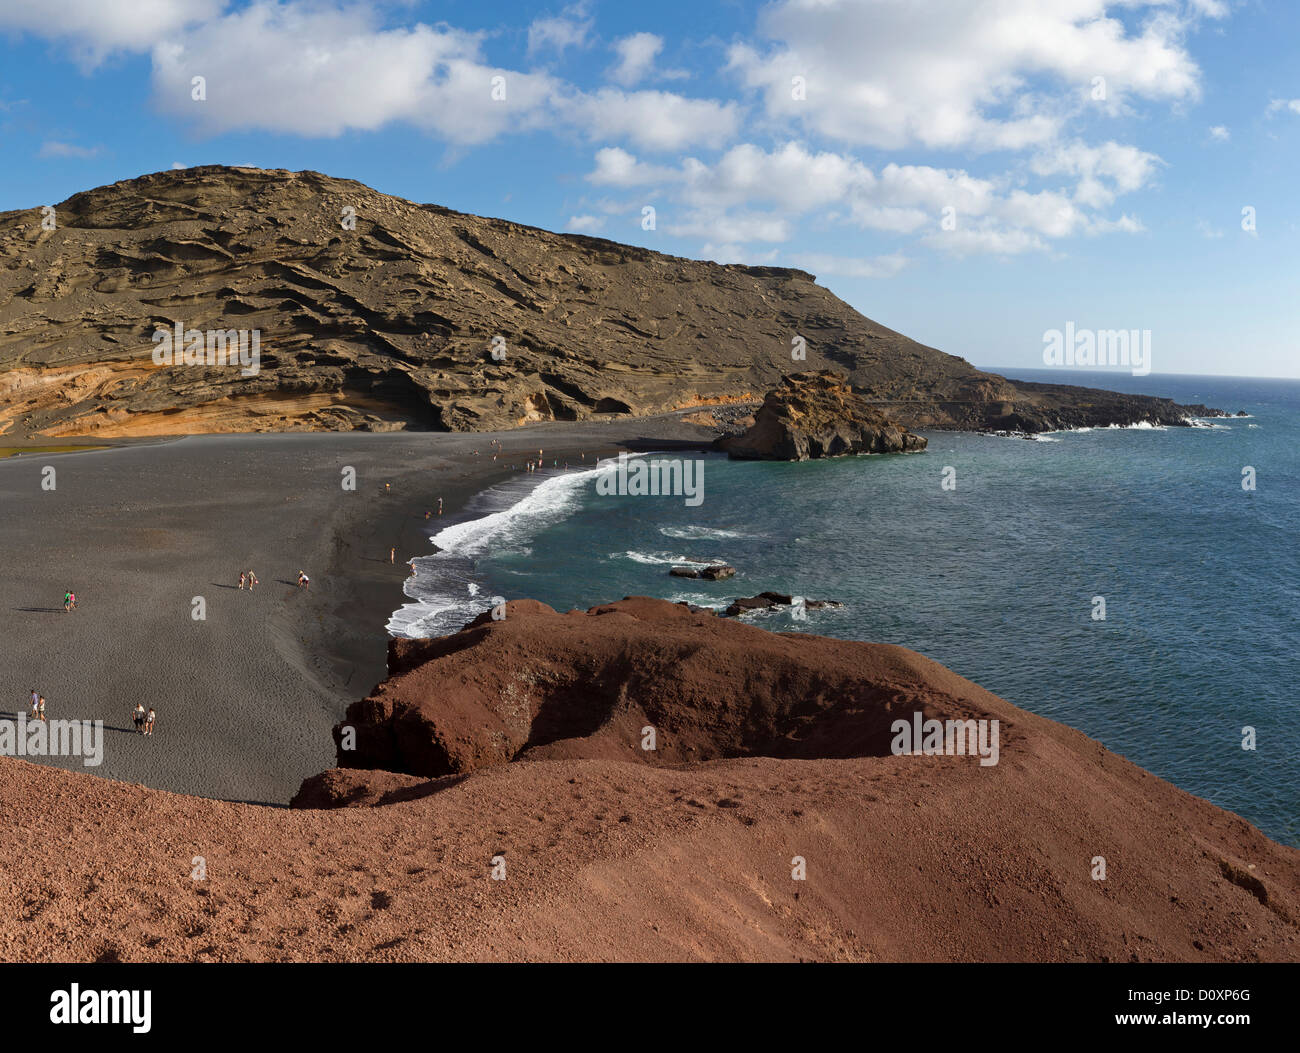 Spain, Lanzarote, El Golfo, Black lava-beach, landscape, water, summer, beach, sea, people, Canary Islands, Stock Photo